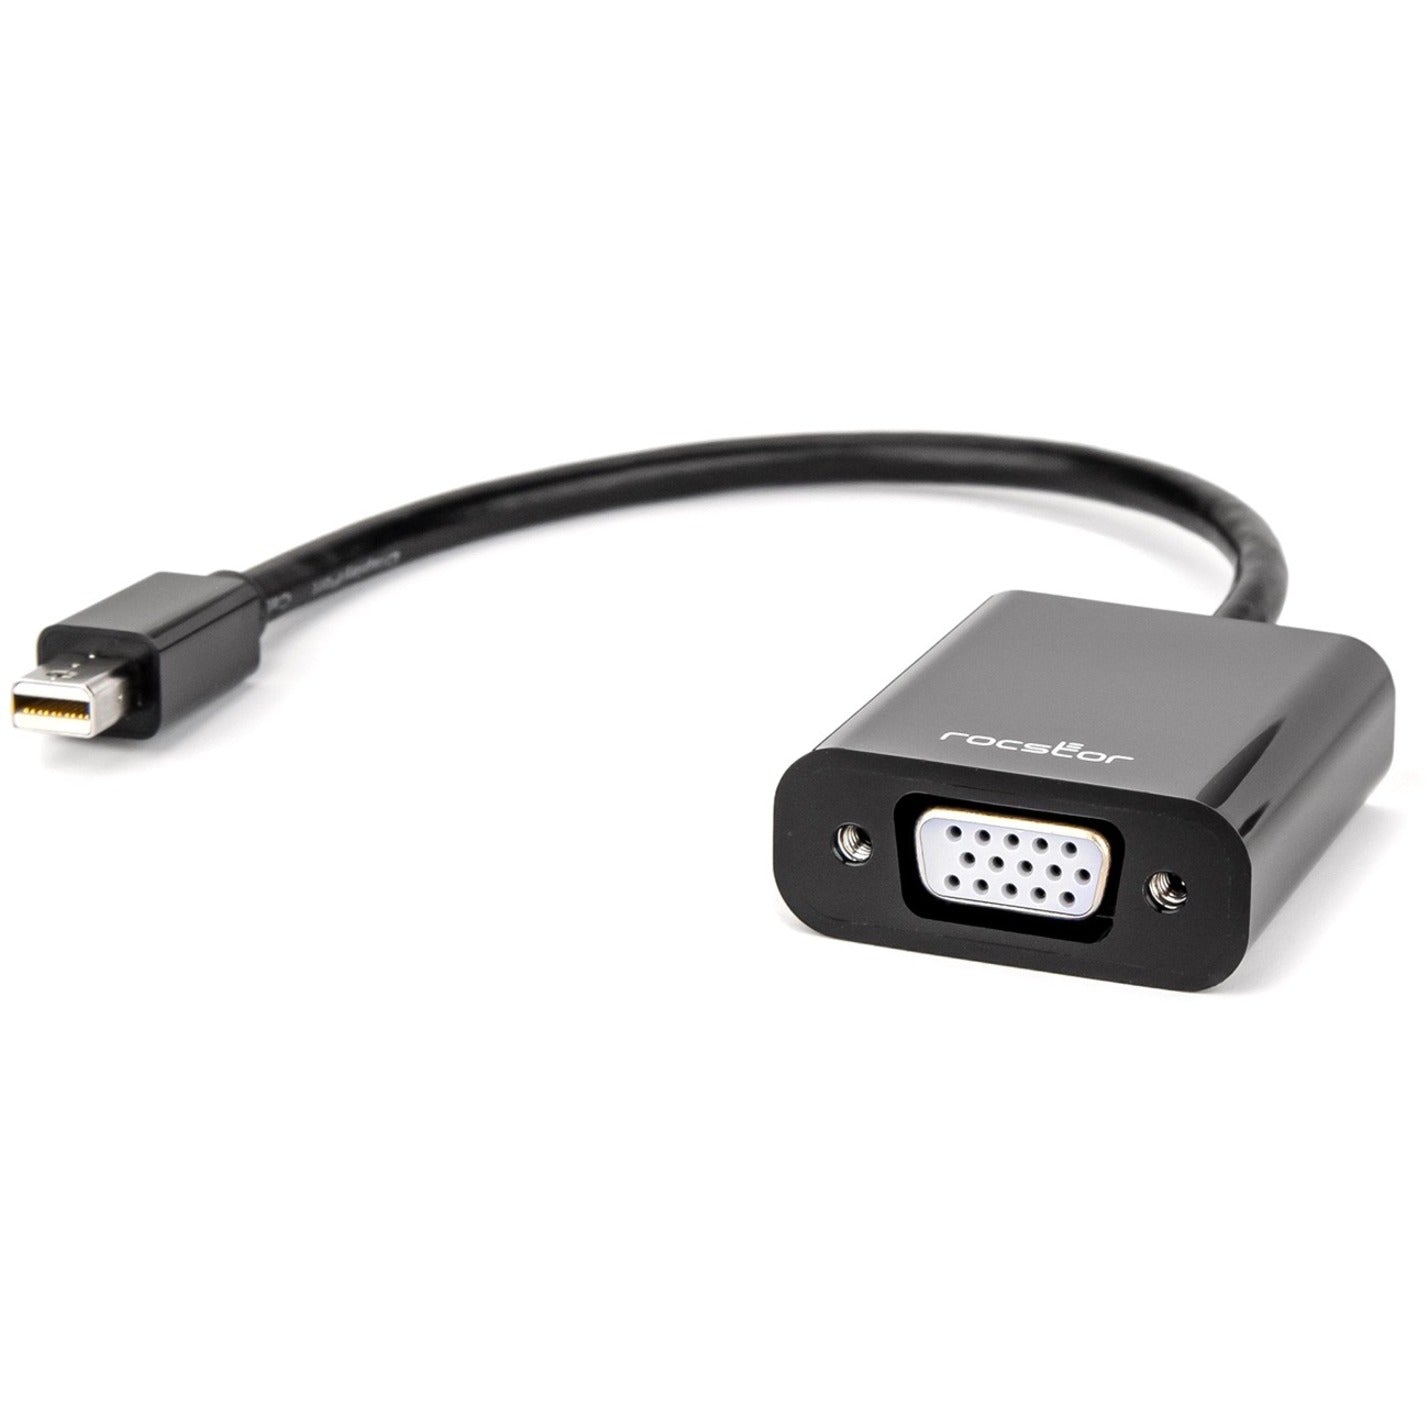 Rocstor Y10A199-B1 Premium Mini DisplayPort to VGA Video Adapter, 6" Cable, Black